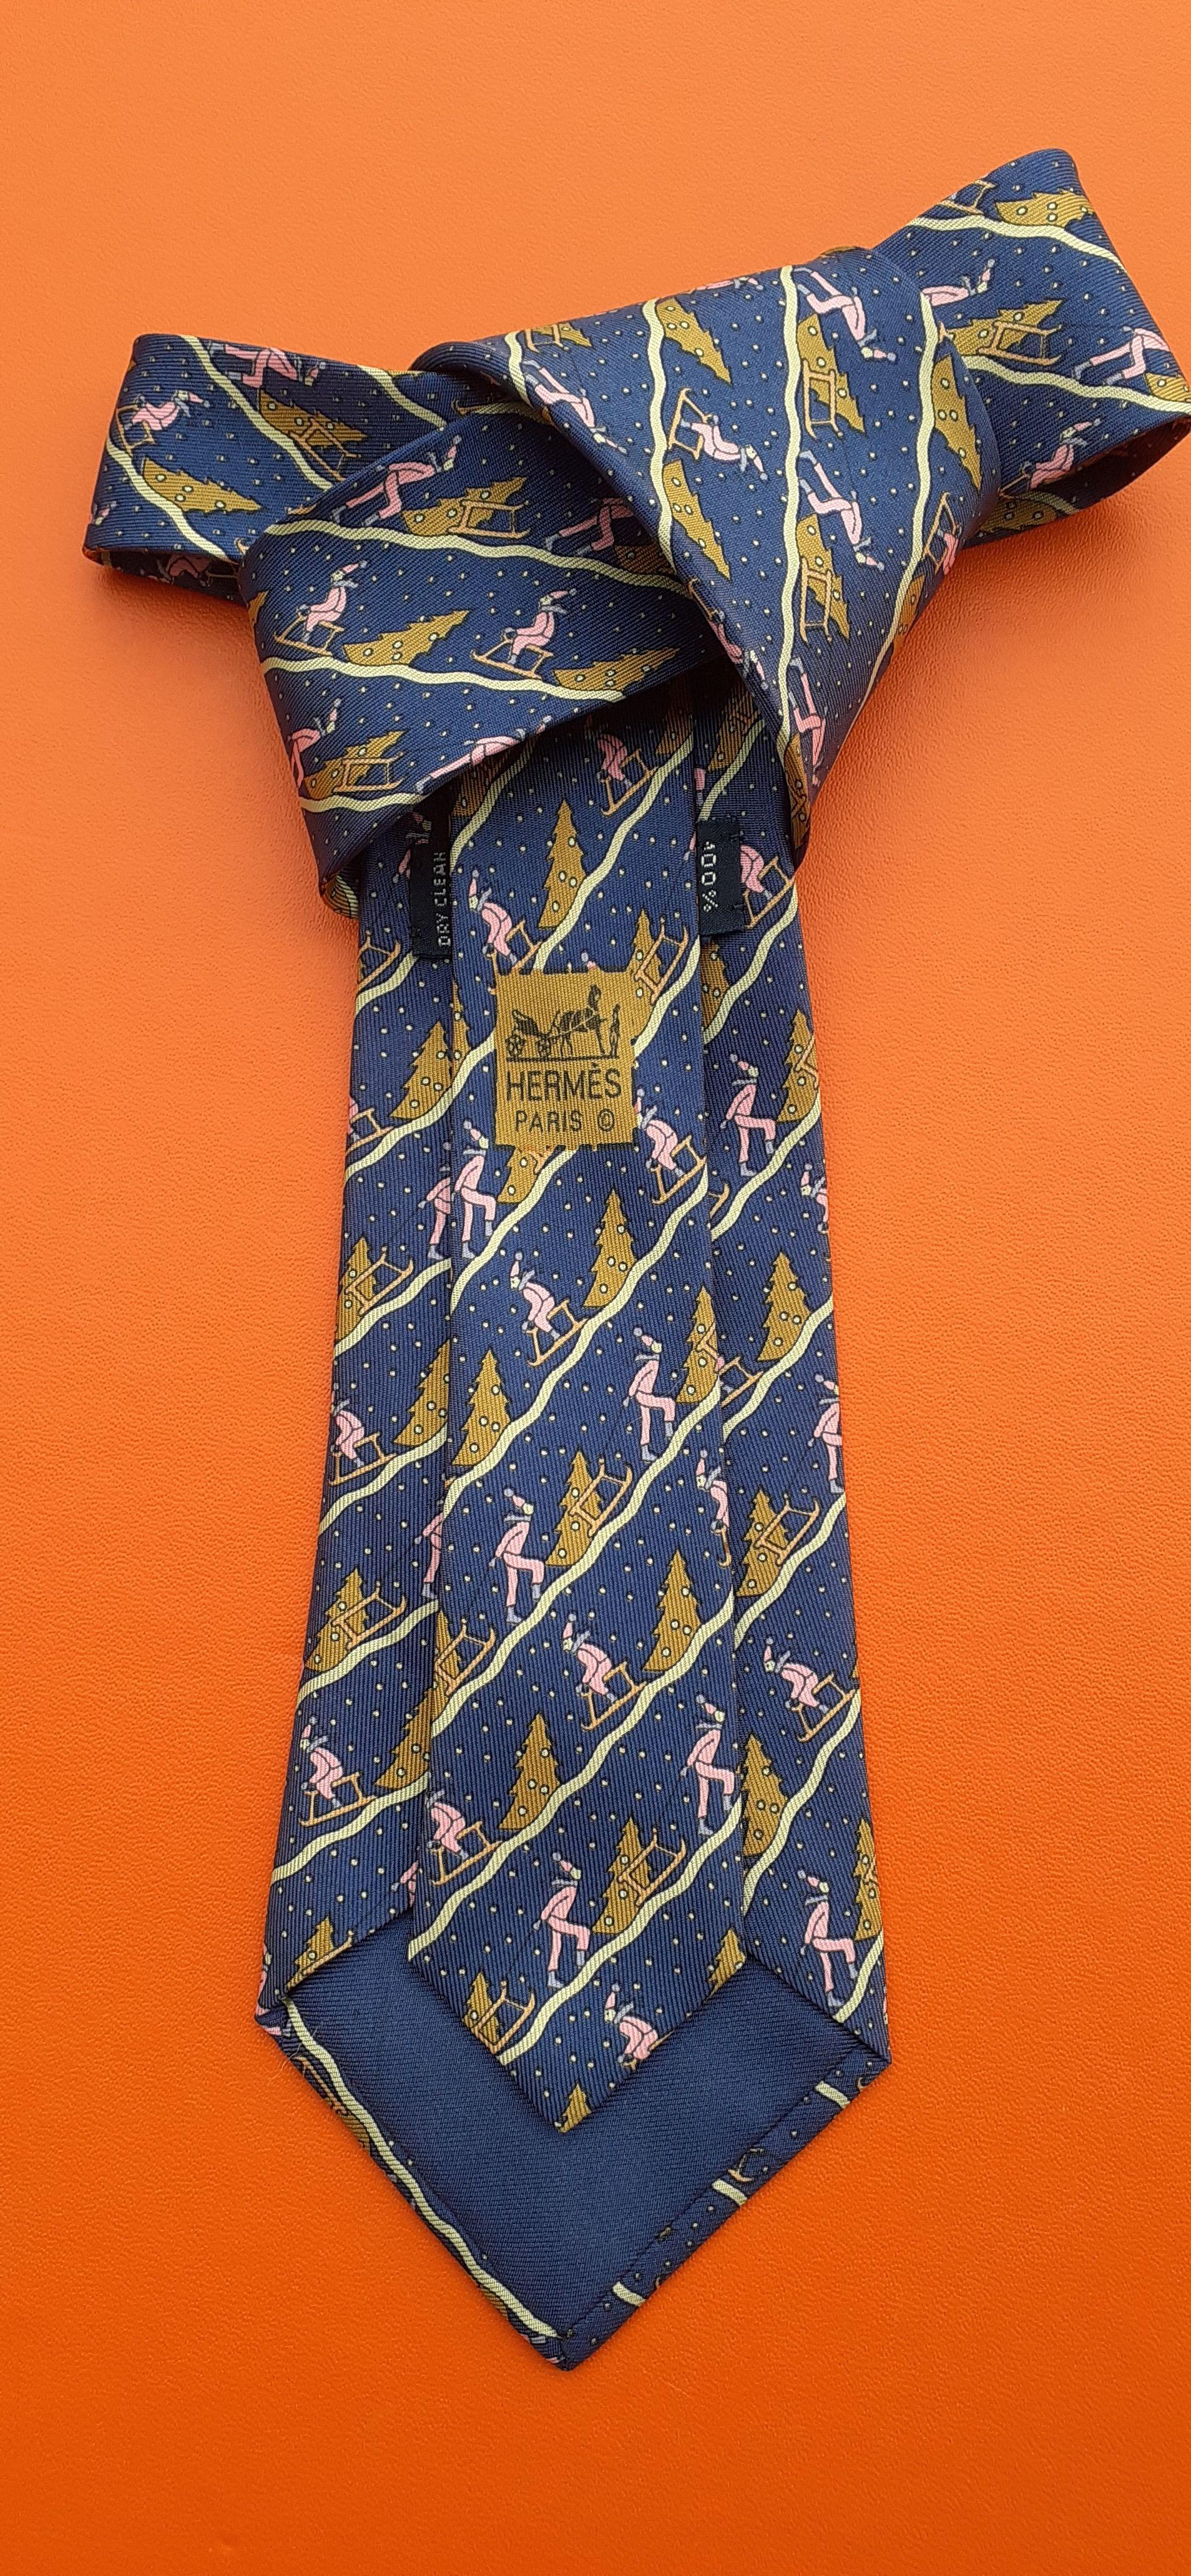 Hermès Silk Tie Sleds and Fir Tree Print Winter Ski Theme For Sale 1